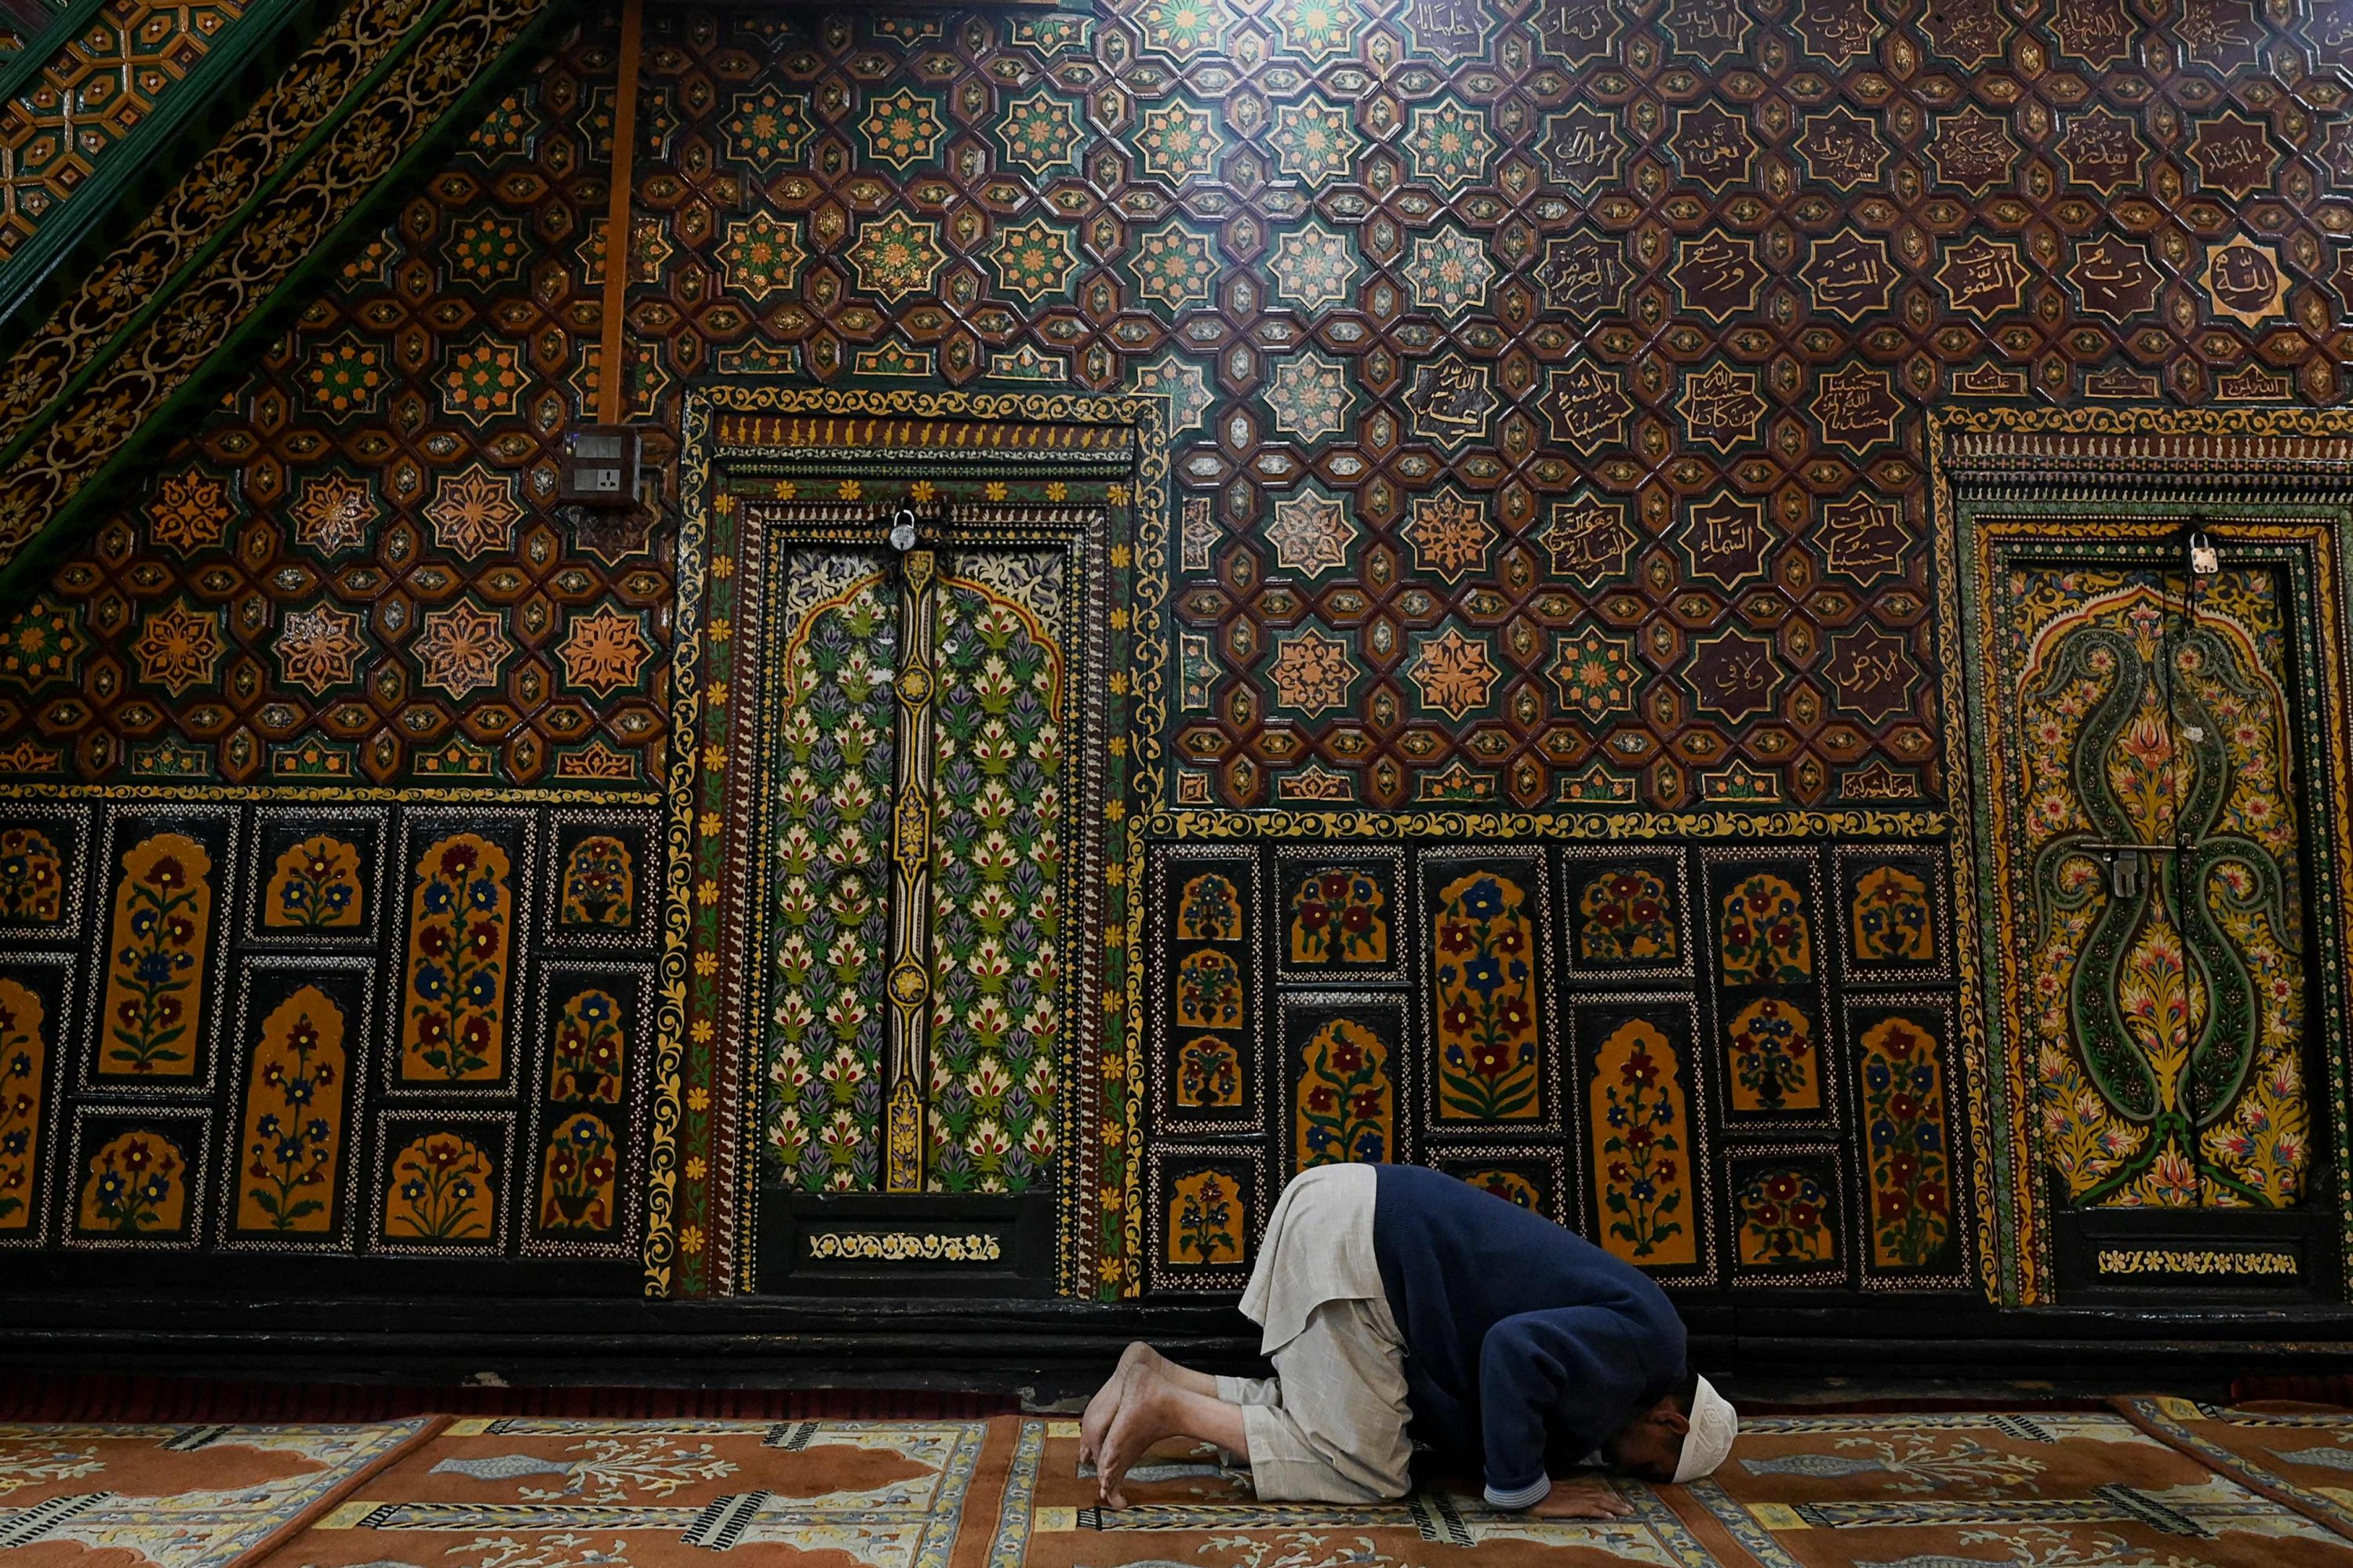 A Muslim devotee prays during the holy month of Ramadan at the Shah-i-Hamdan shrine in Srinagar, Kashmir, Apr. 13, 2022. (AFP)